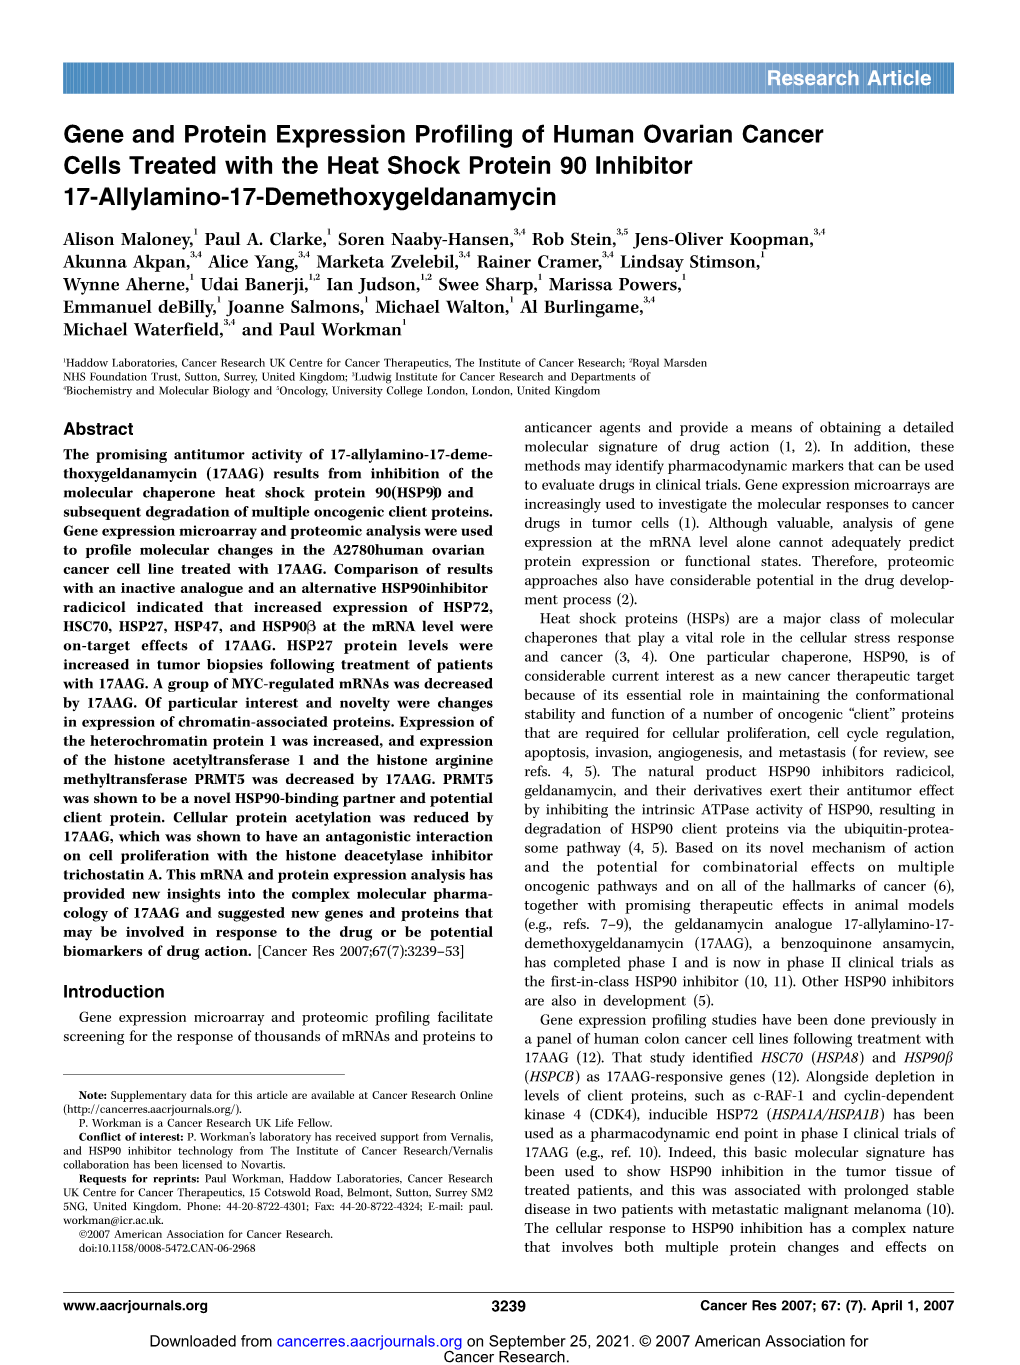 Gene and Protein Expression Profiling of Human Ovarian Cancer Cells Treated with the Heat Shock Protein 90 Inhibitor 17-Allylamino-17-Demethoxygeldanamycin